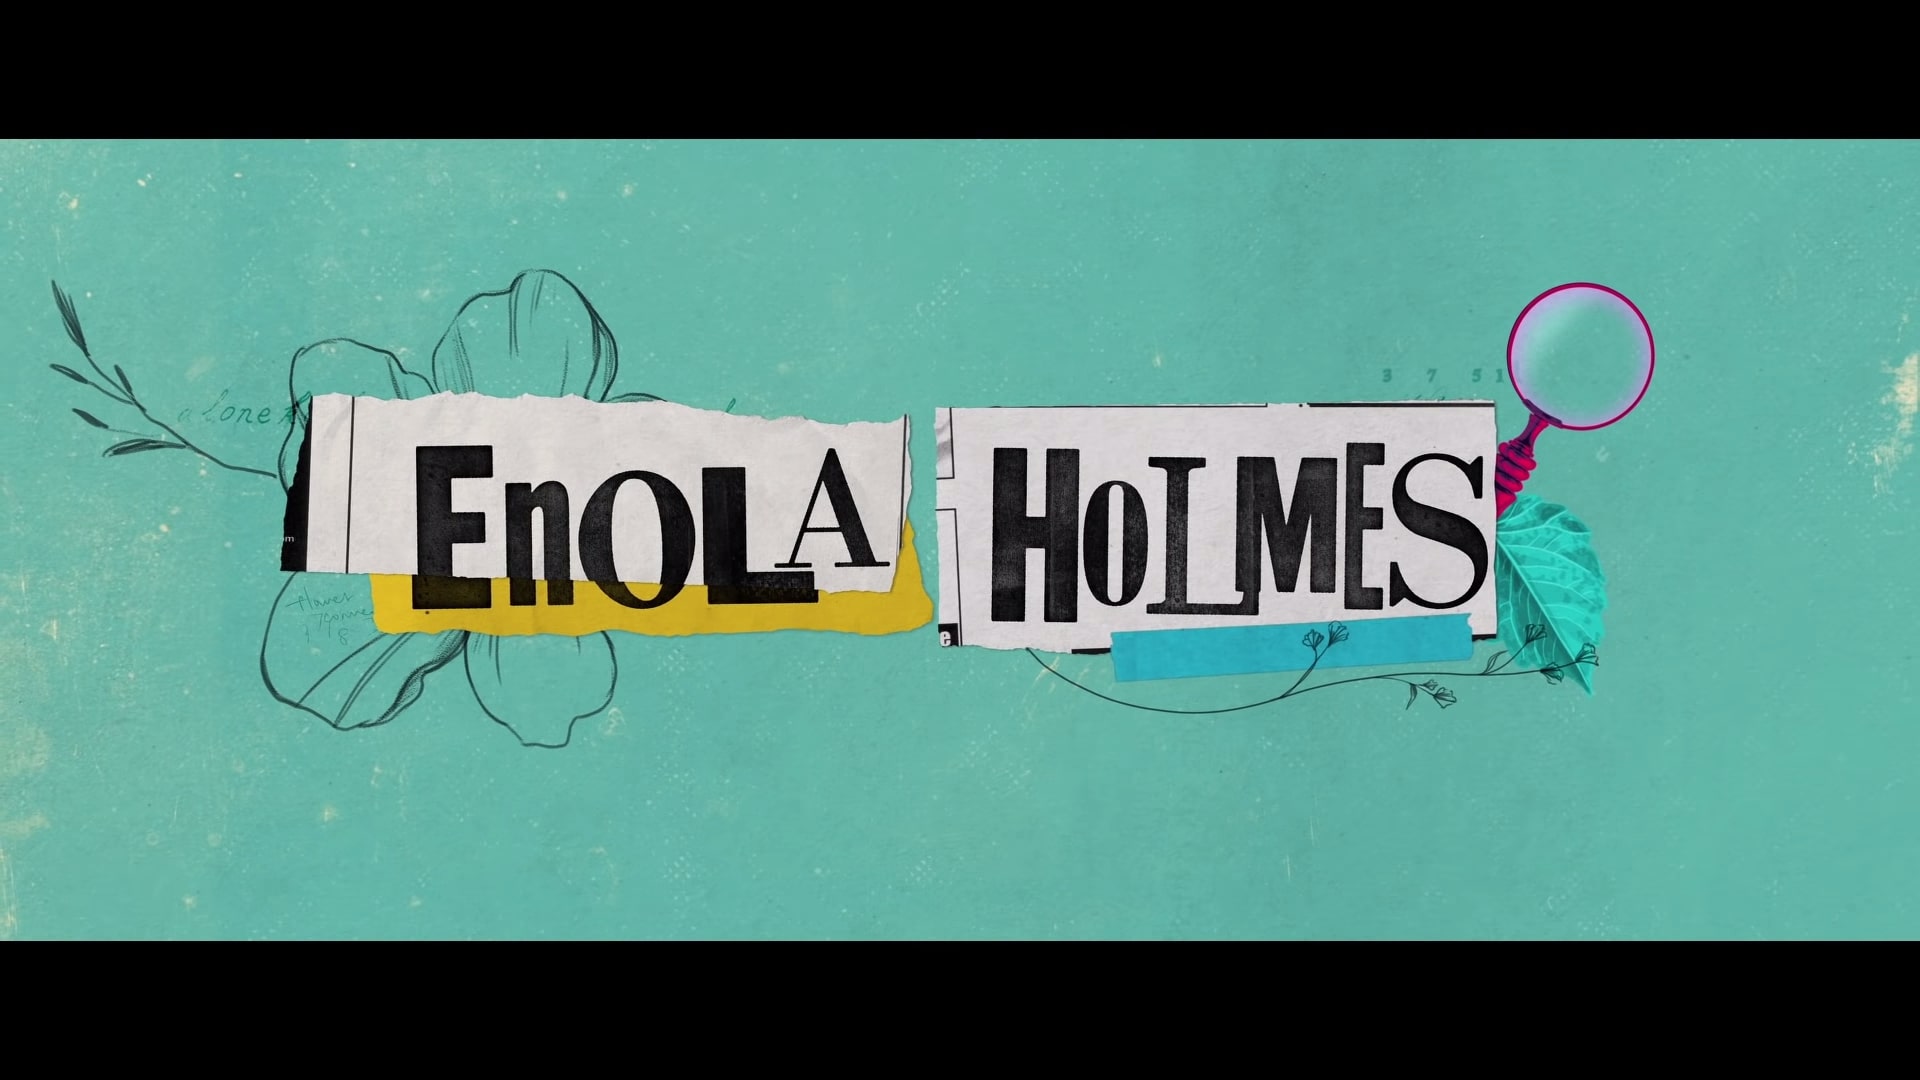 Netflix Enola Holmes Trailer, Netflix Adventure Drama, Netflix Crime Drama, Coming to Netflix in September 2020